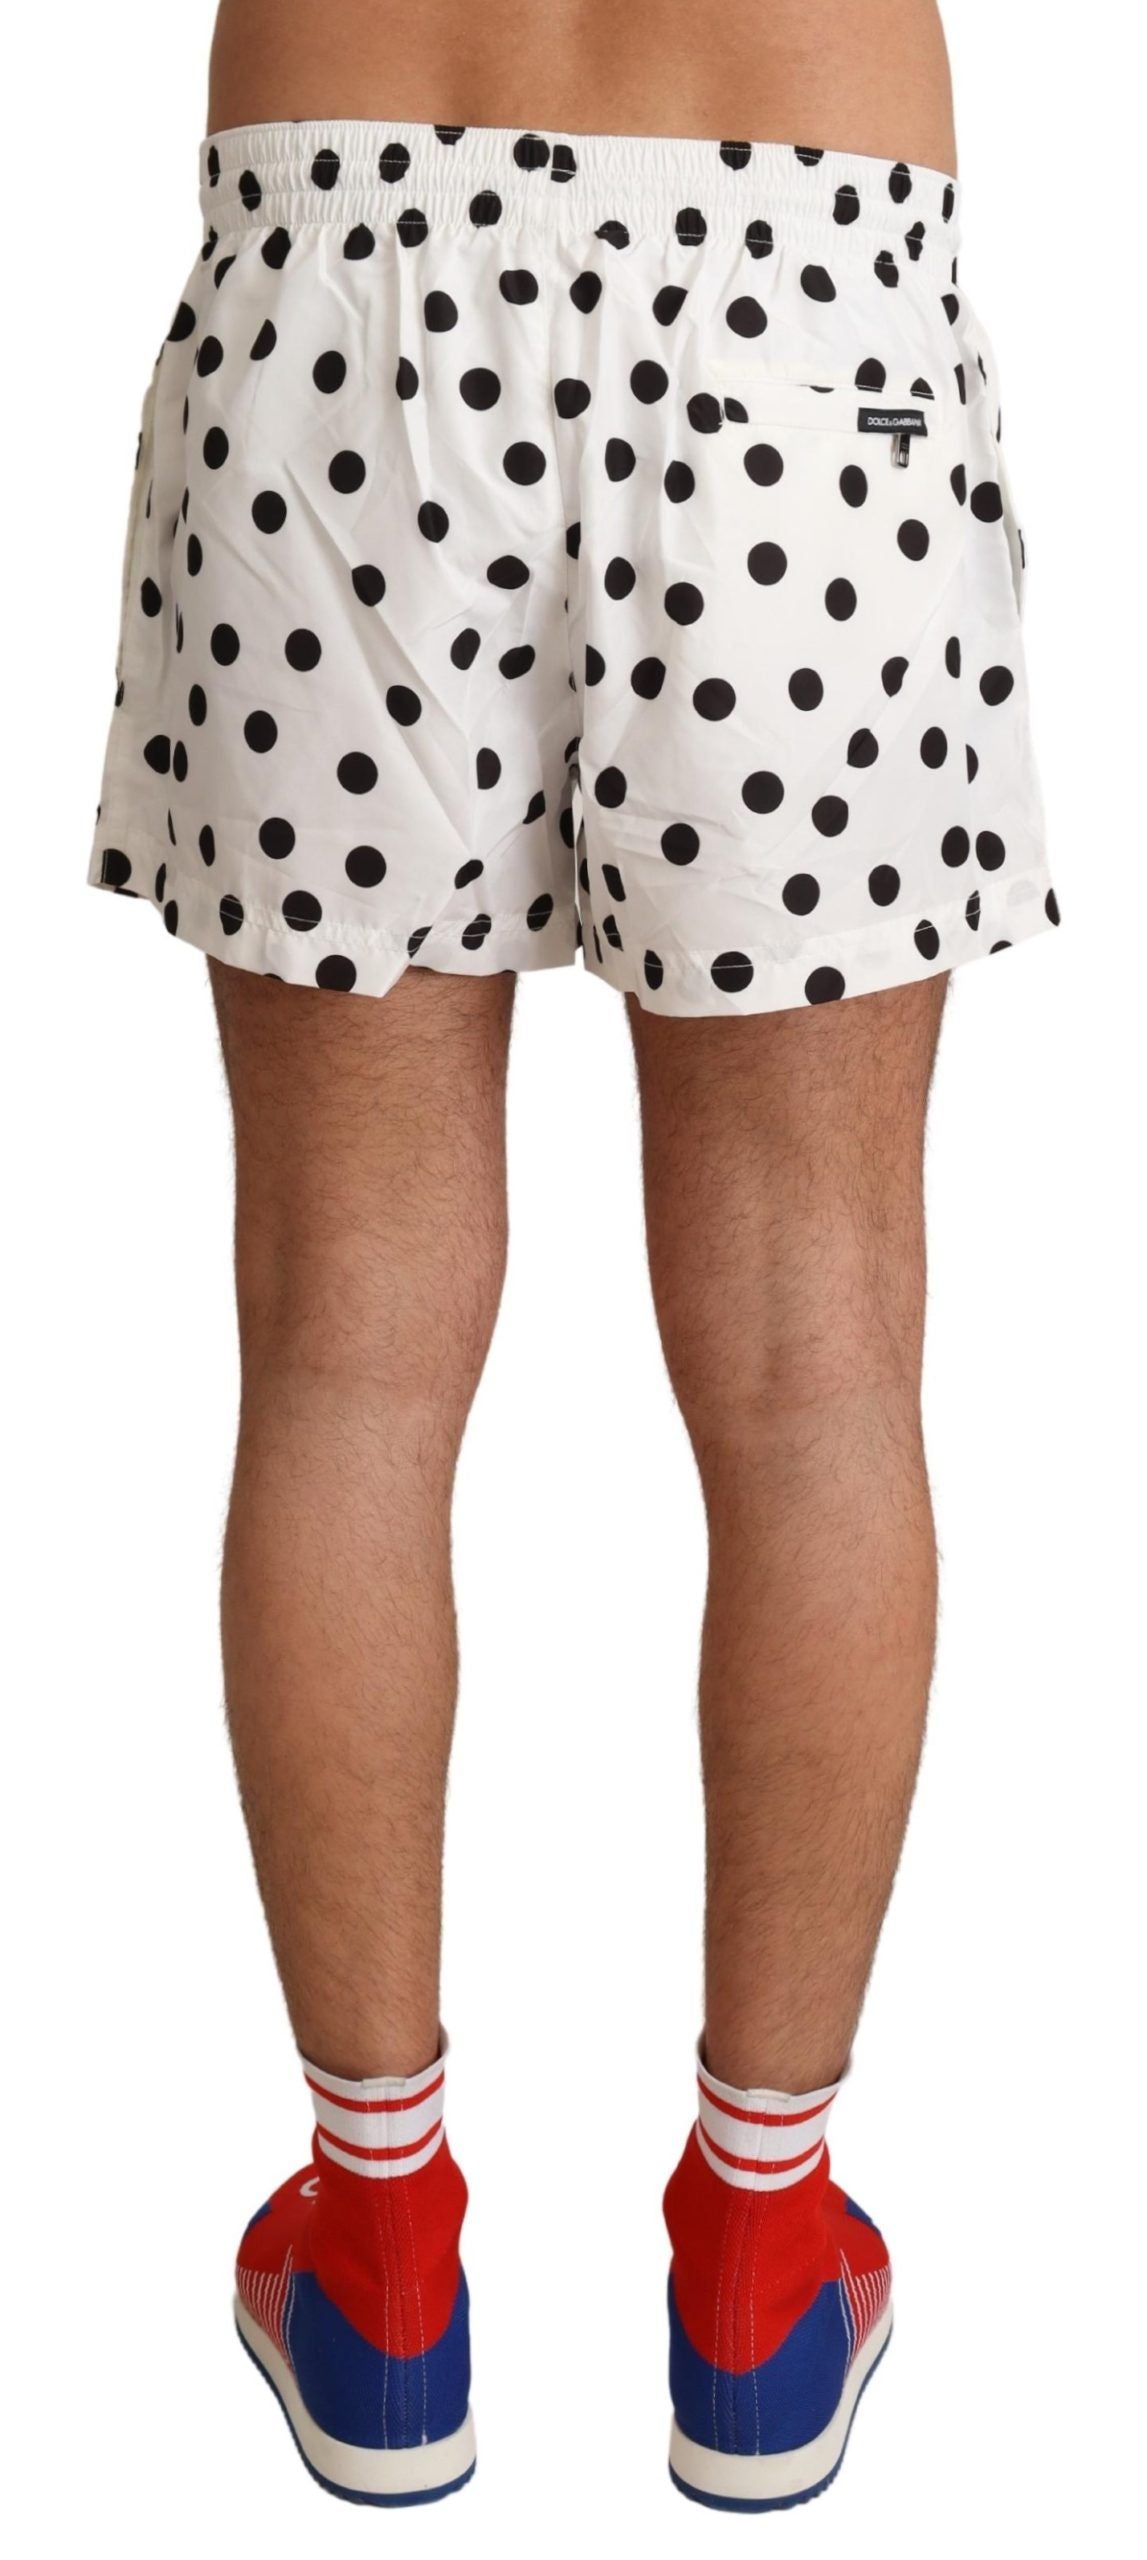 White Polka Dots Beachwear Shorts Swimwear